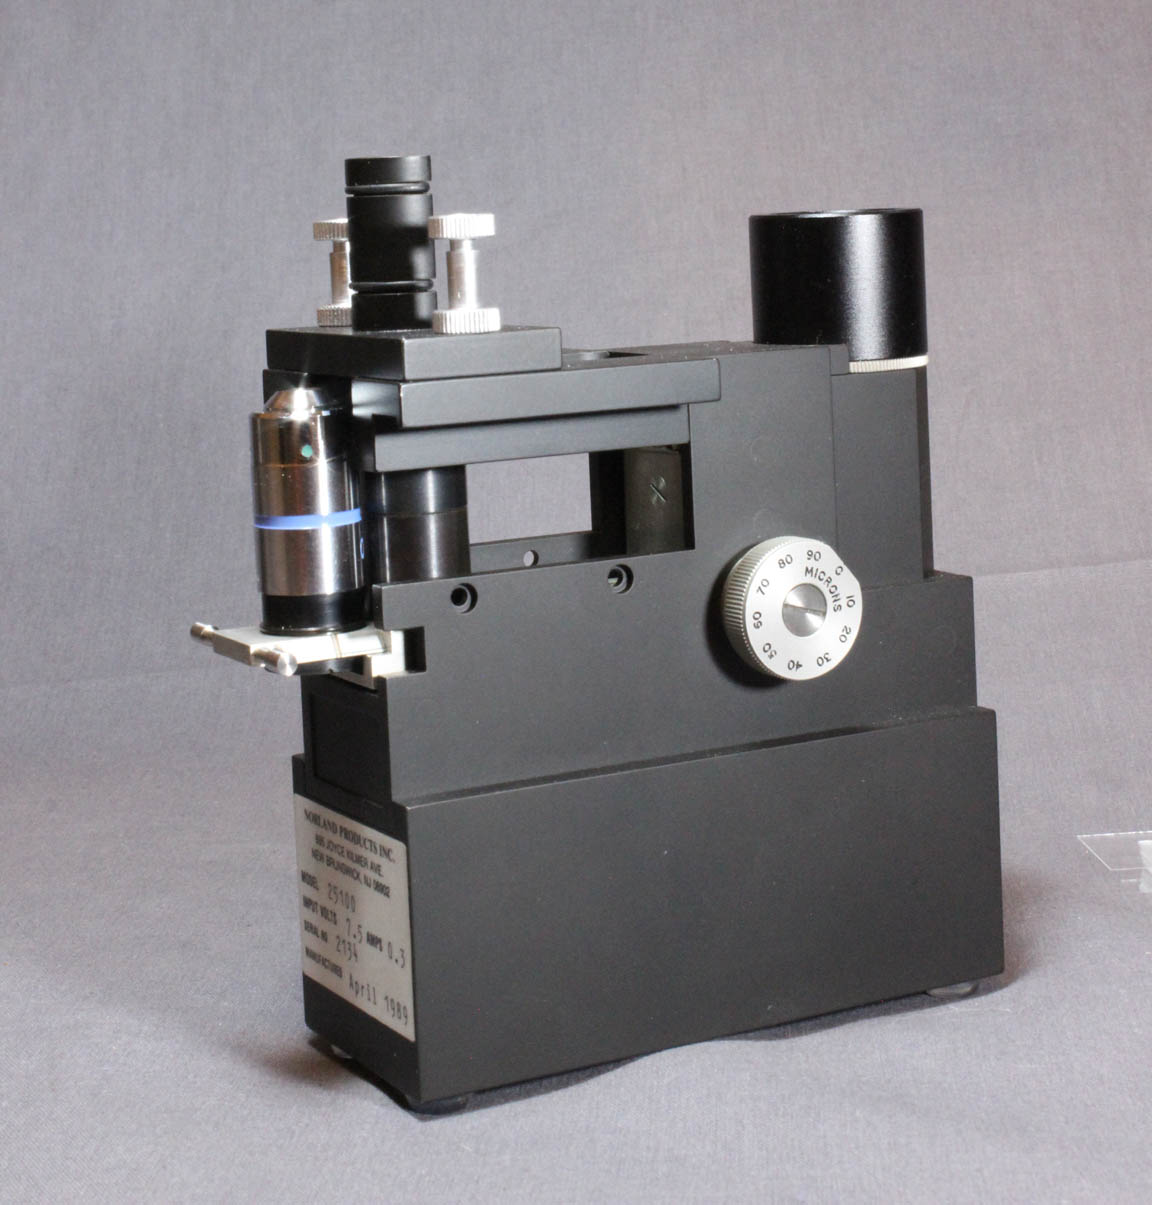 Interferometer microscope